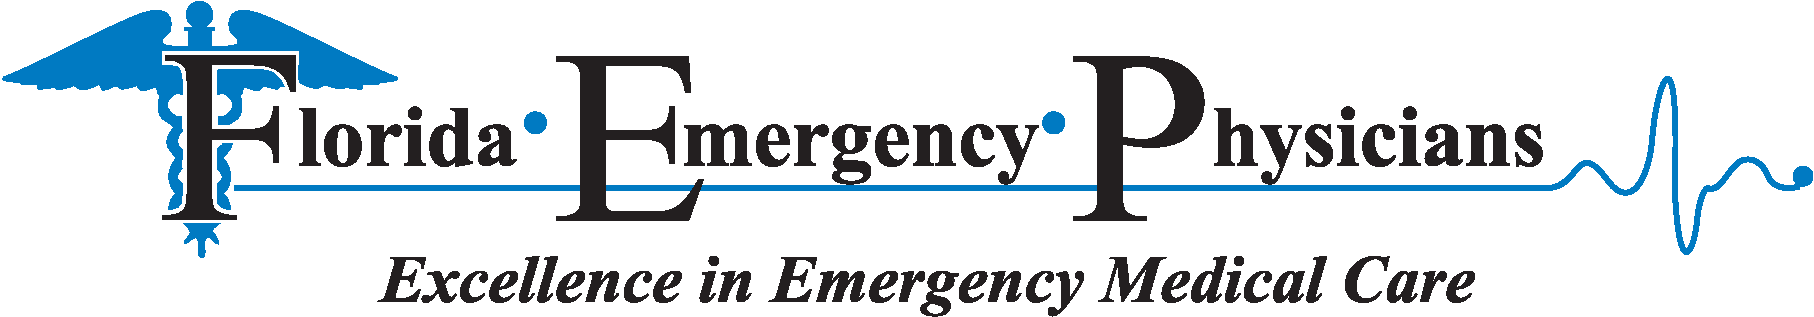 florida emergency physicians logo